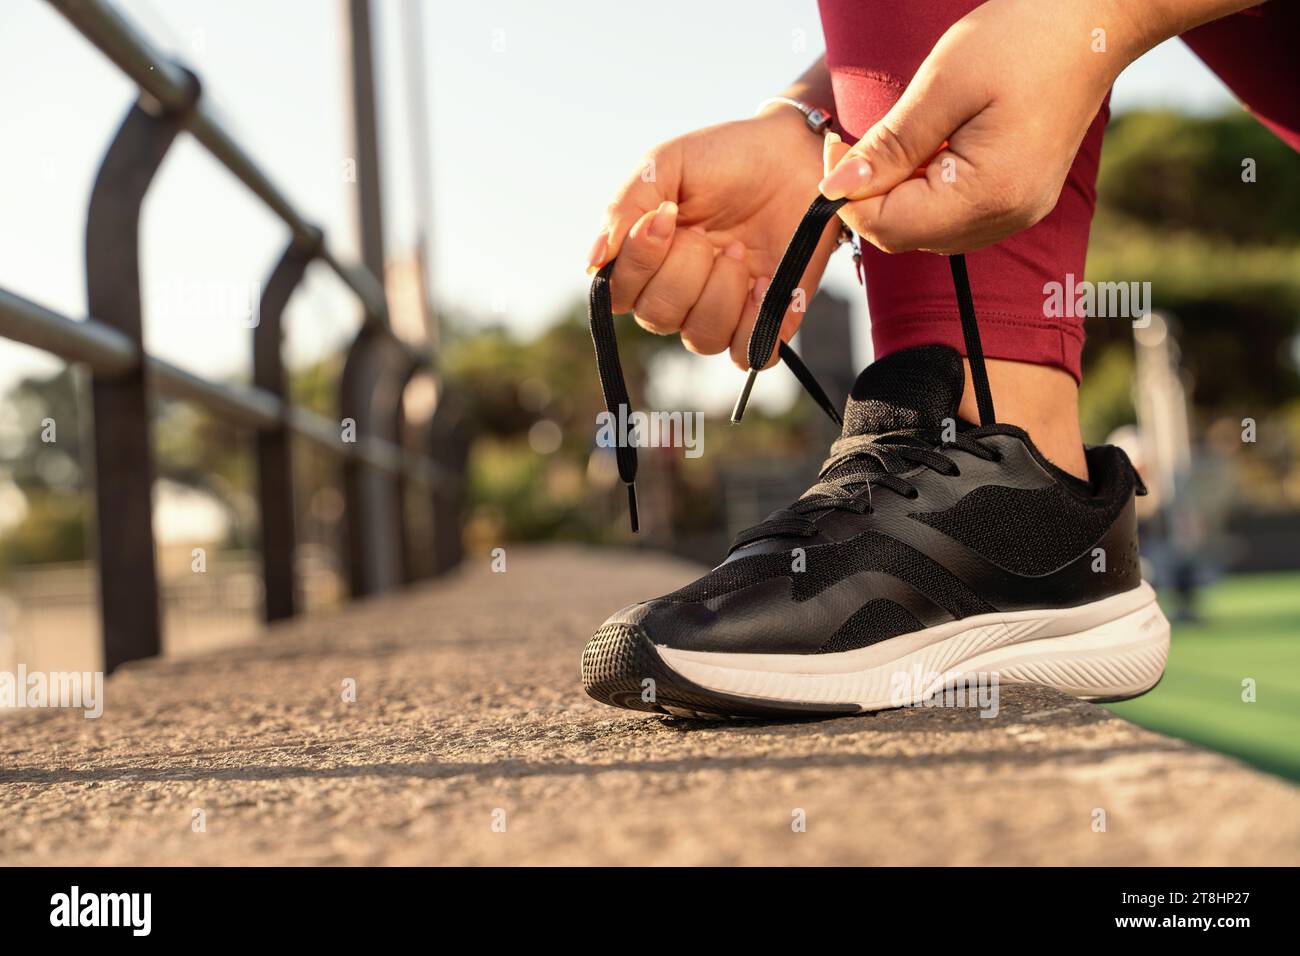 Woman in jogging attire stock photo. Image of jogging - 16803964